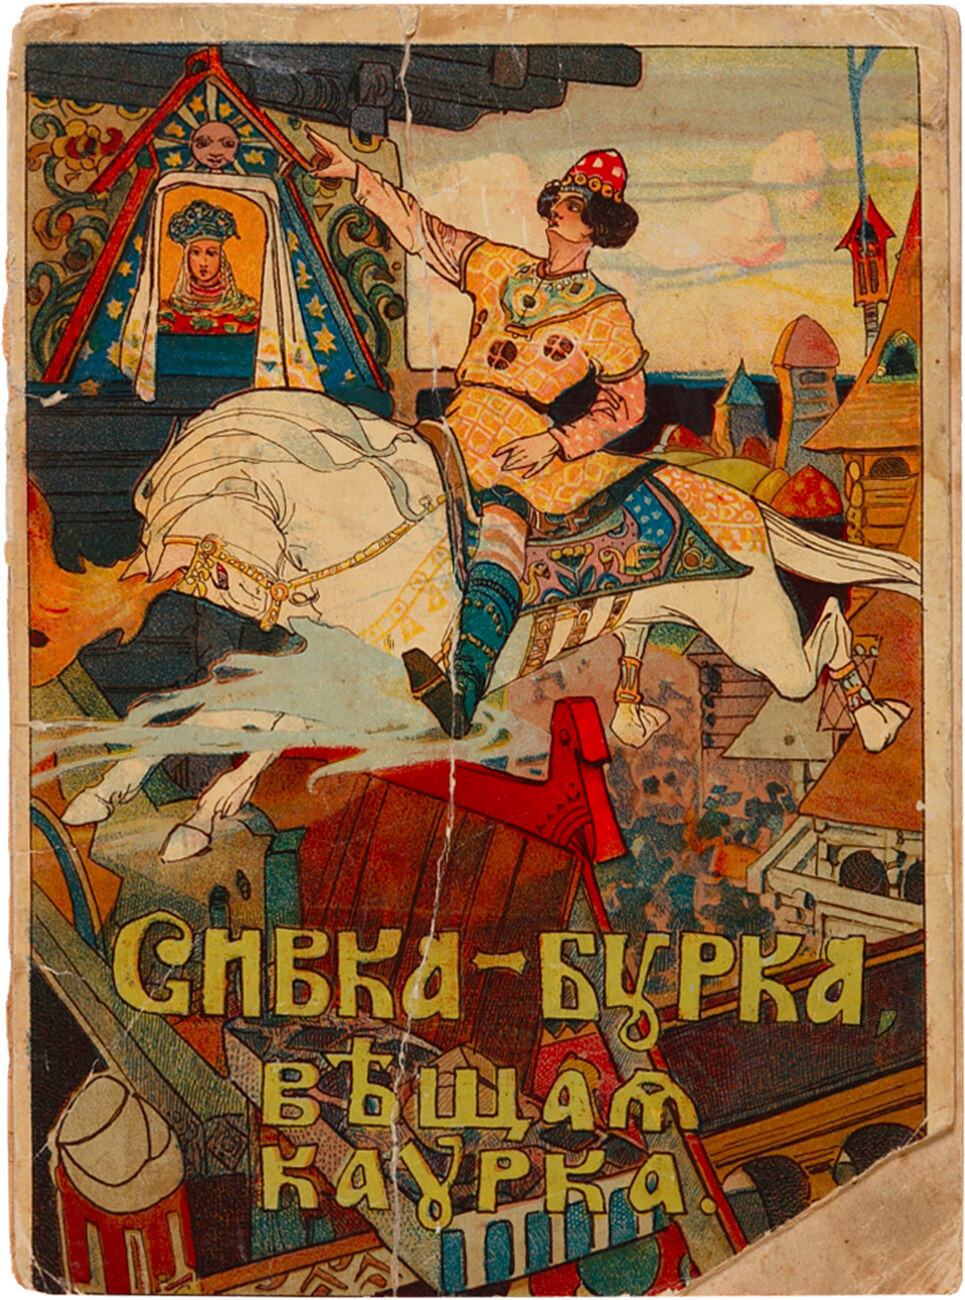 Ilustrasi untuk “Sivka-Burka”. Rumah Penerbit I.D. Satin, 1906.